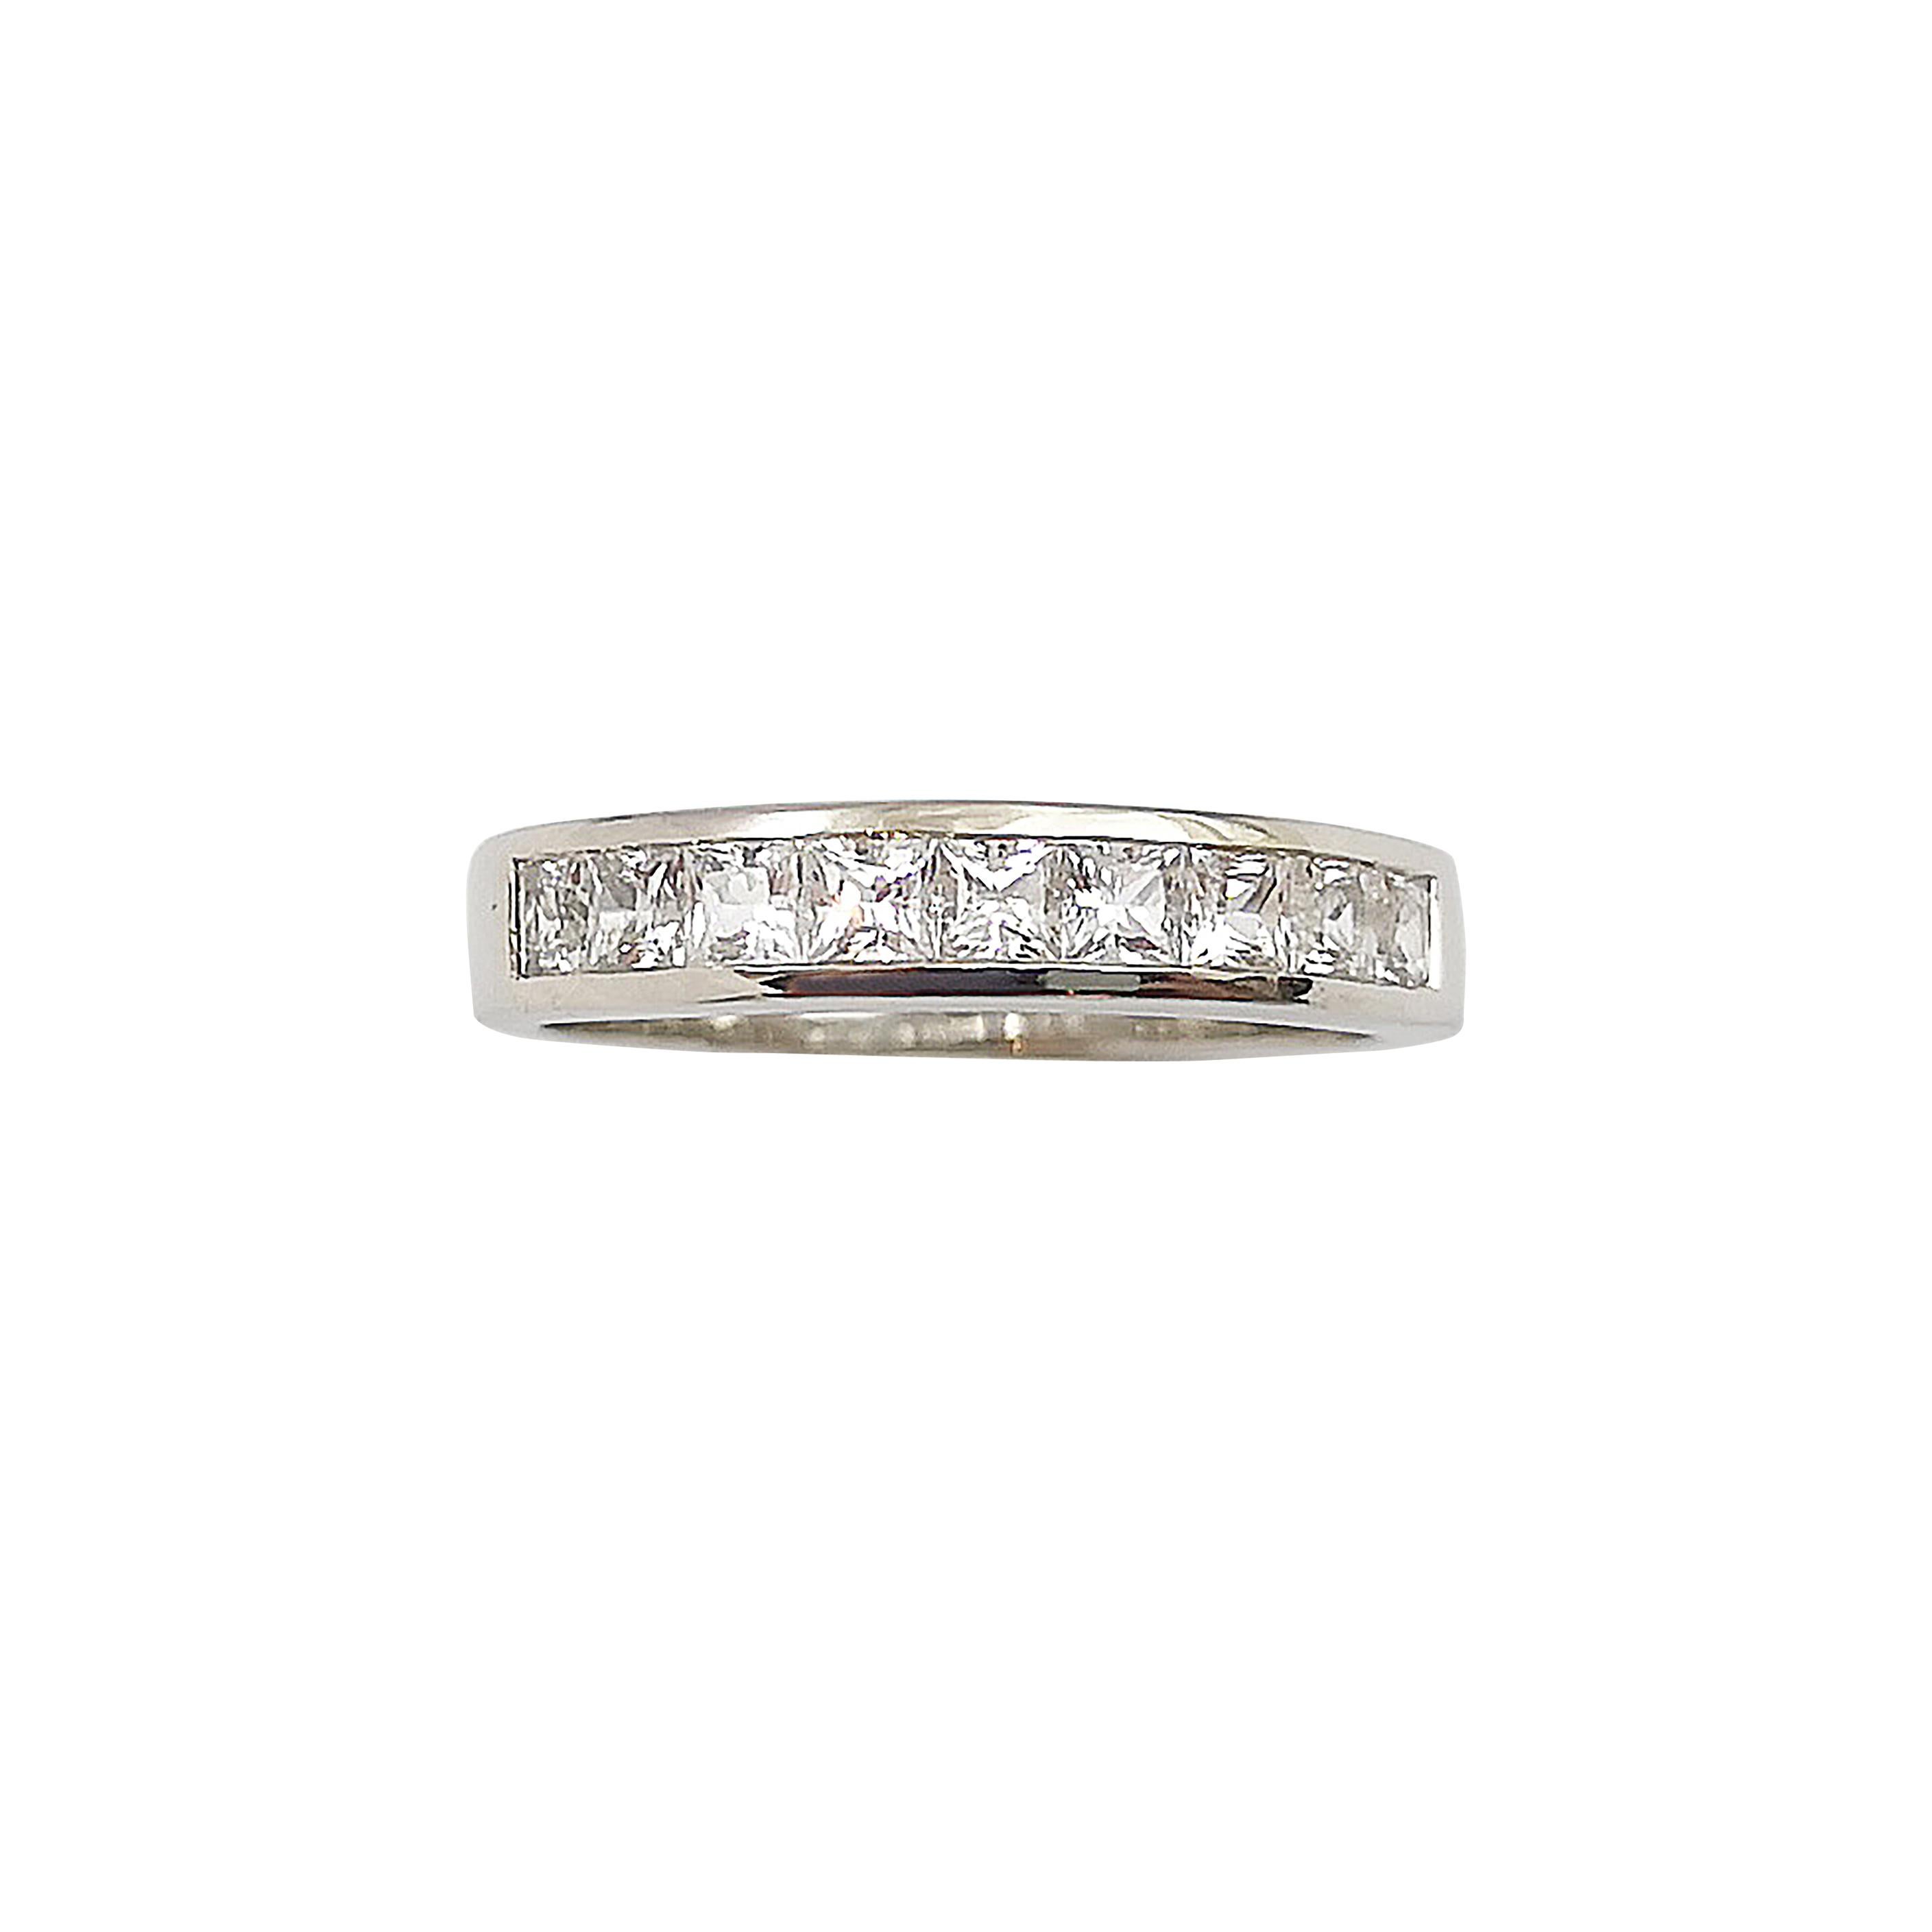 White Sapphire Ring Set in 18 Karat White Gold Settings